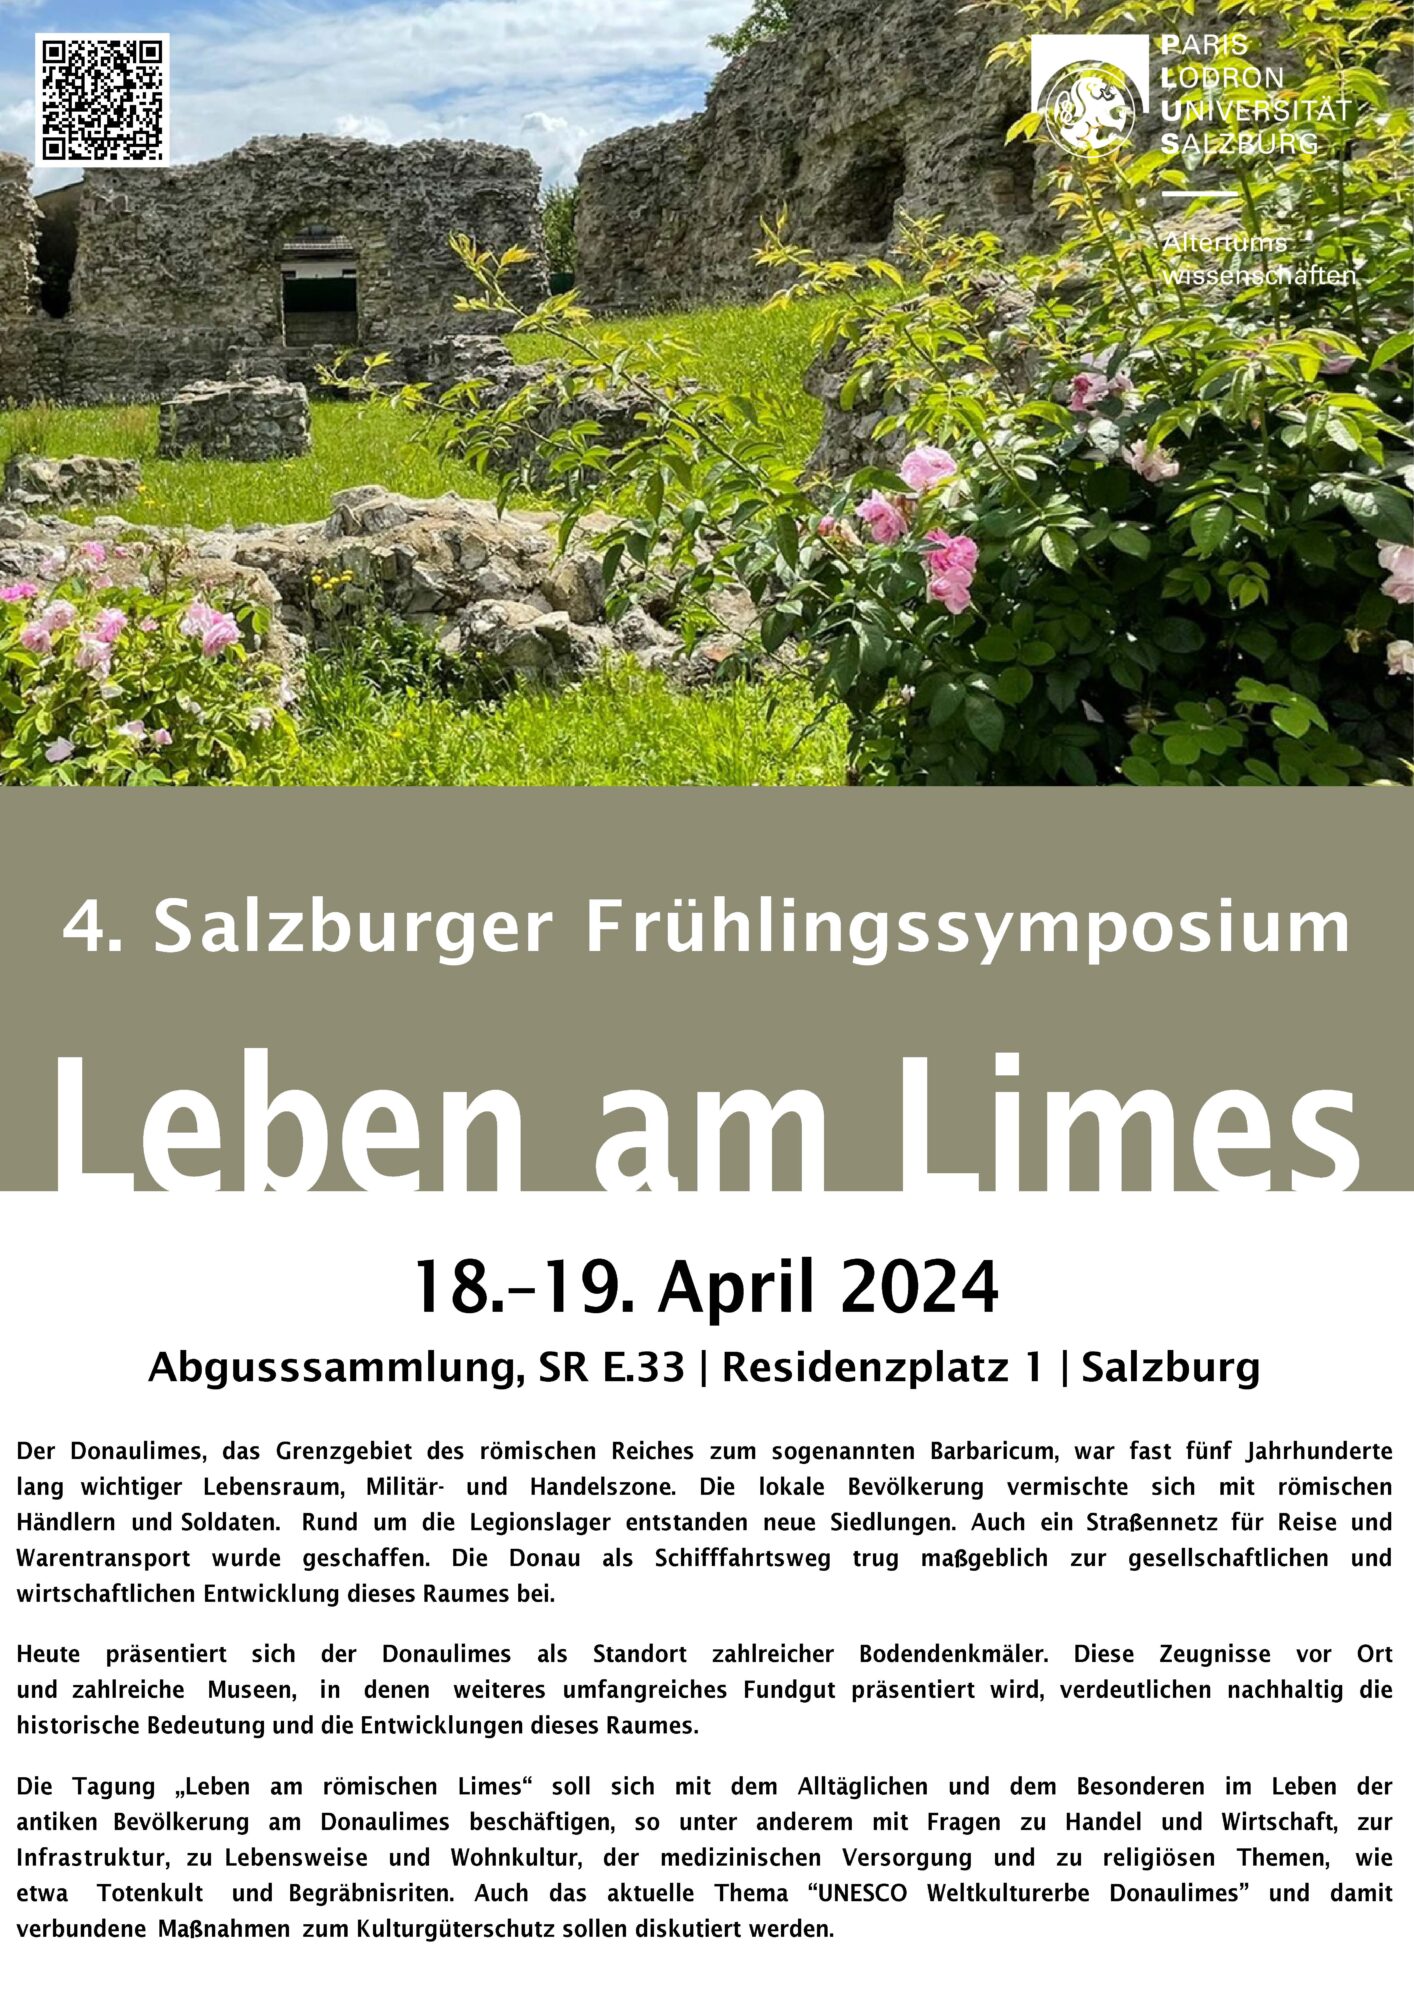 Frühlingssymposium 2024 - Leben am Limes